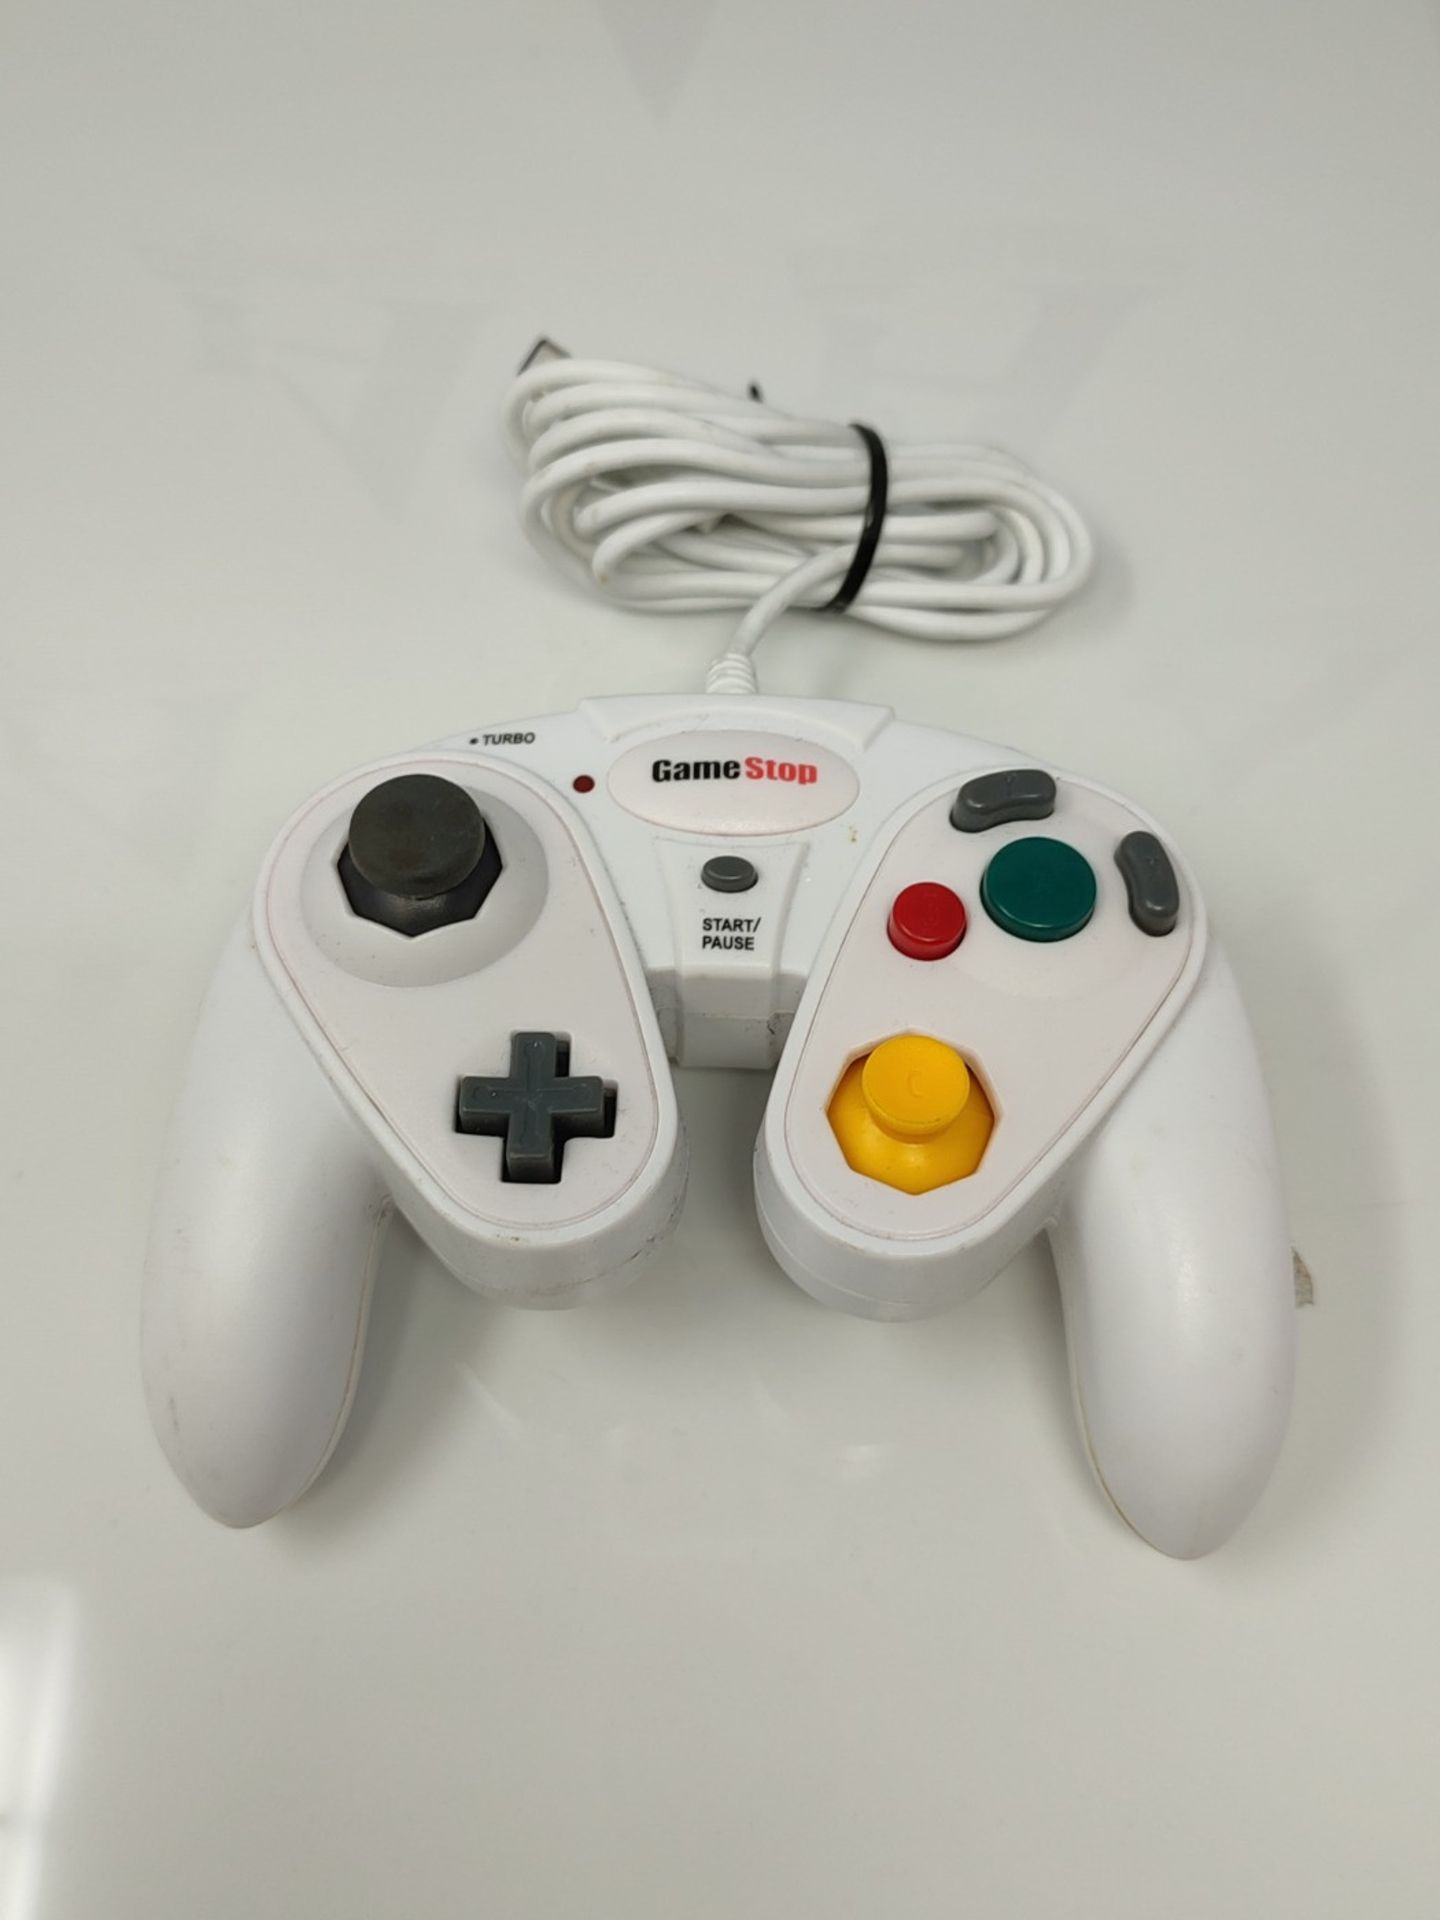 Nintendo Game Stop controller - Image 2 of 3